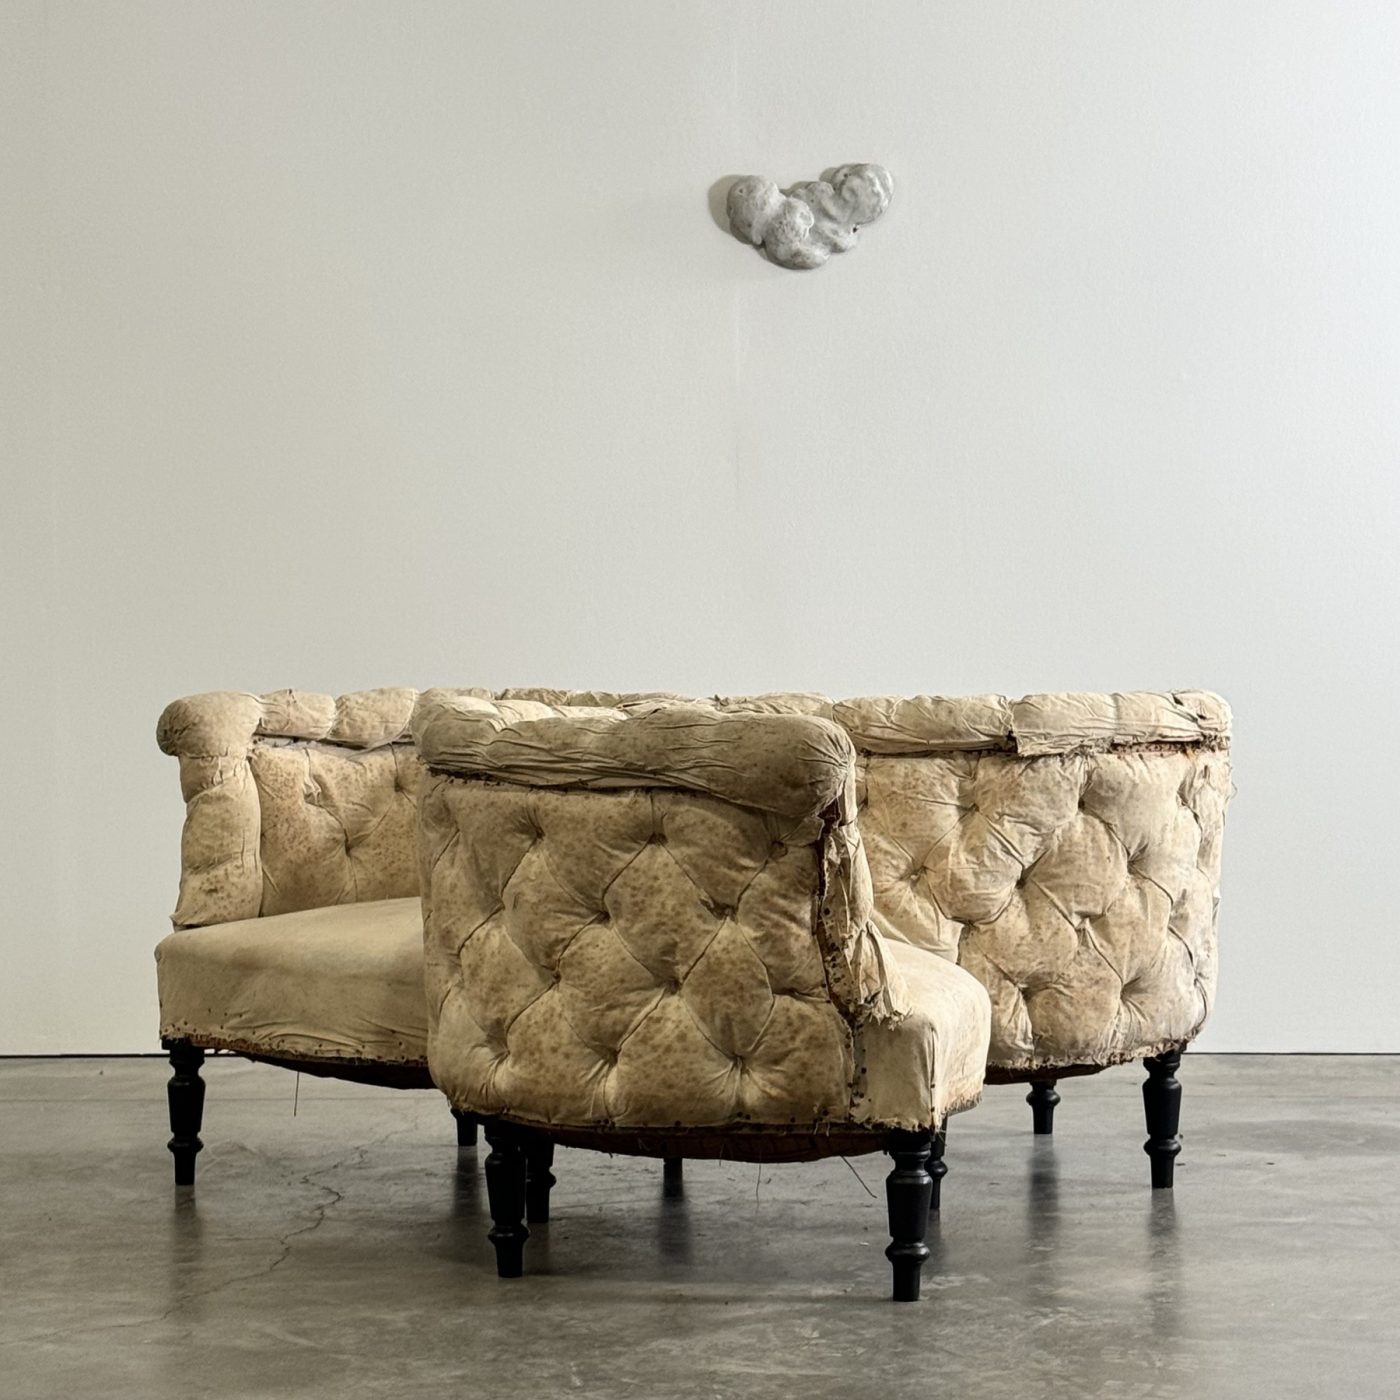 objet-vagabond-indiscret-sofa0001